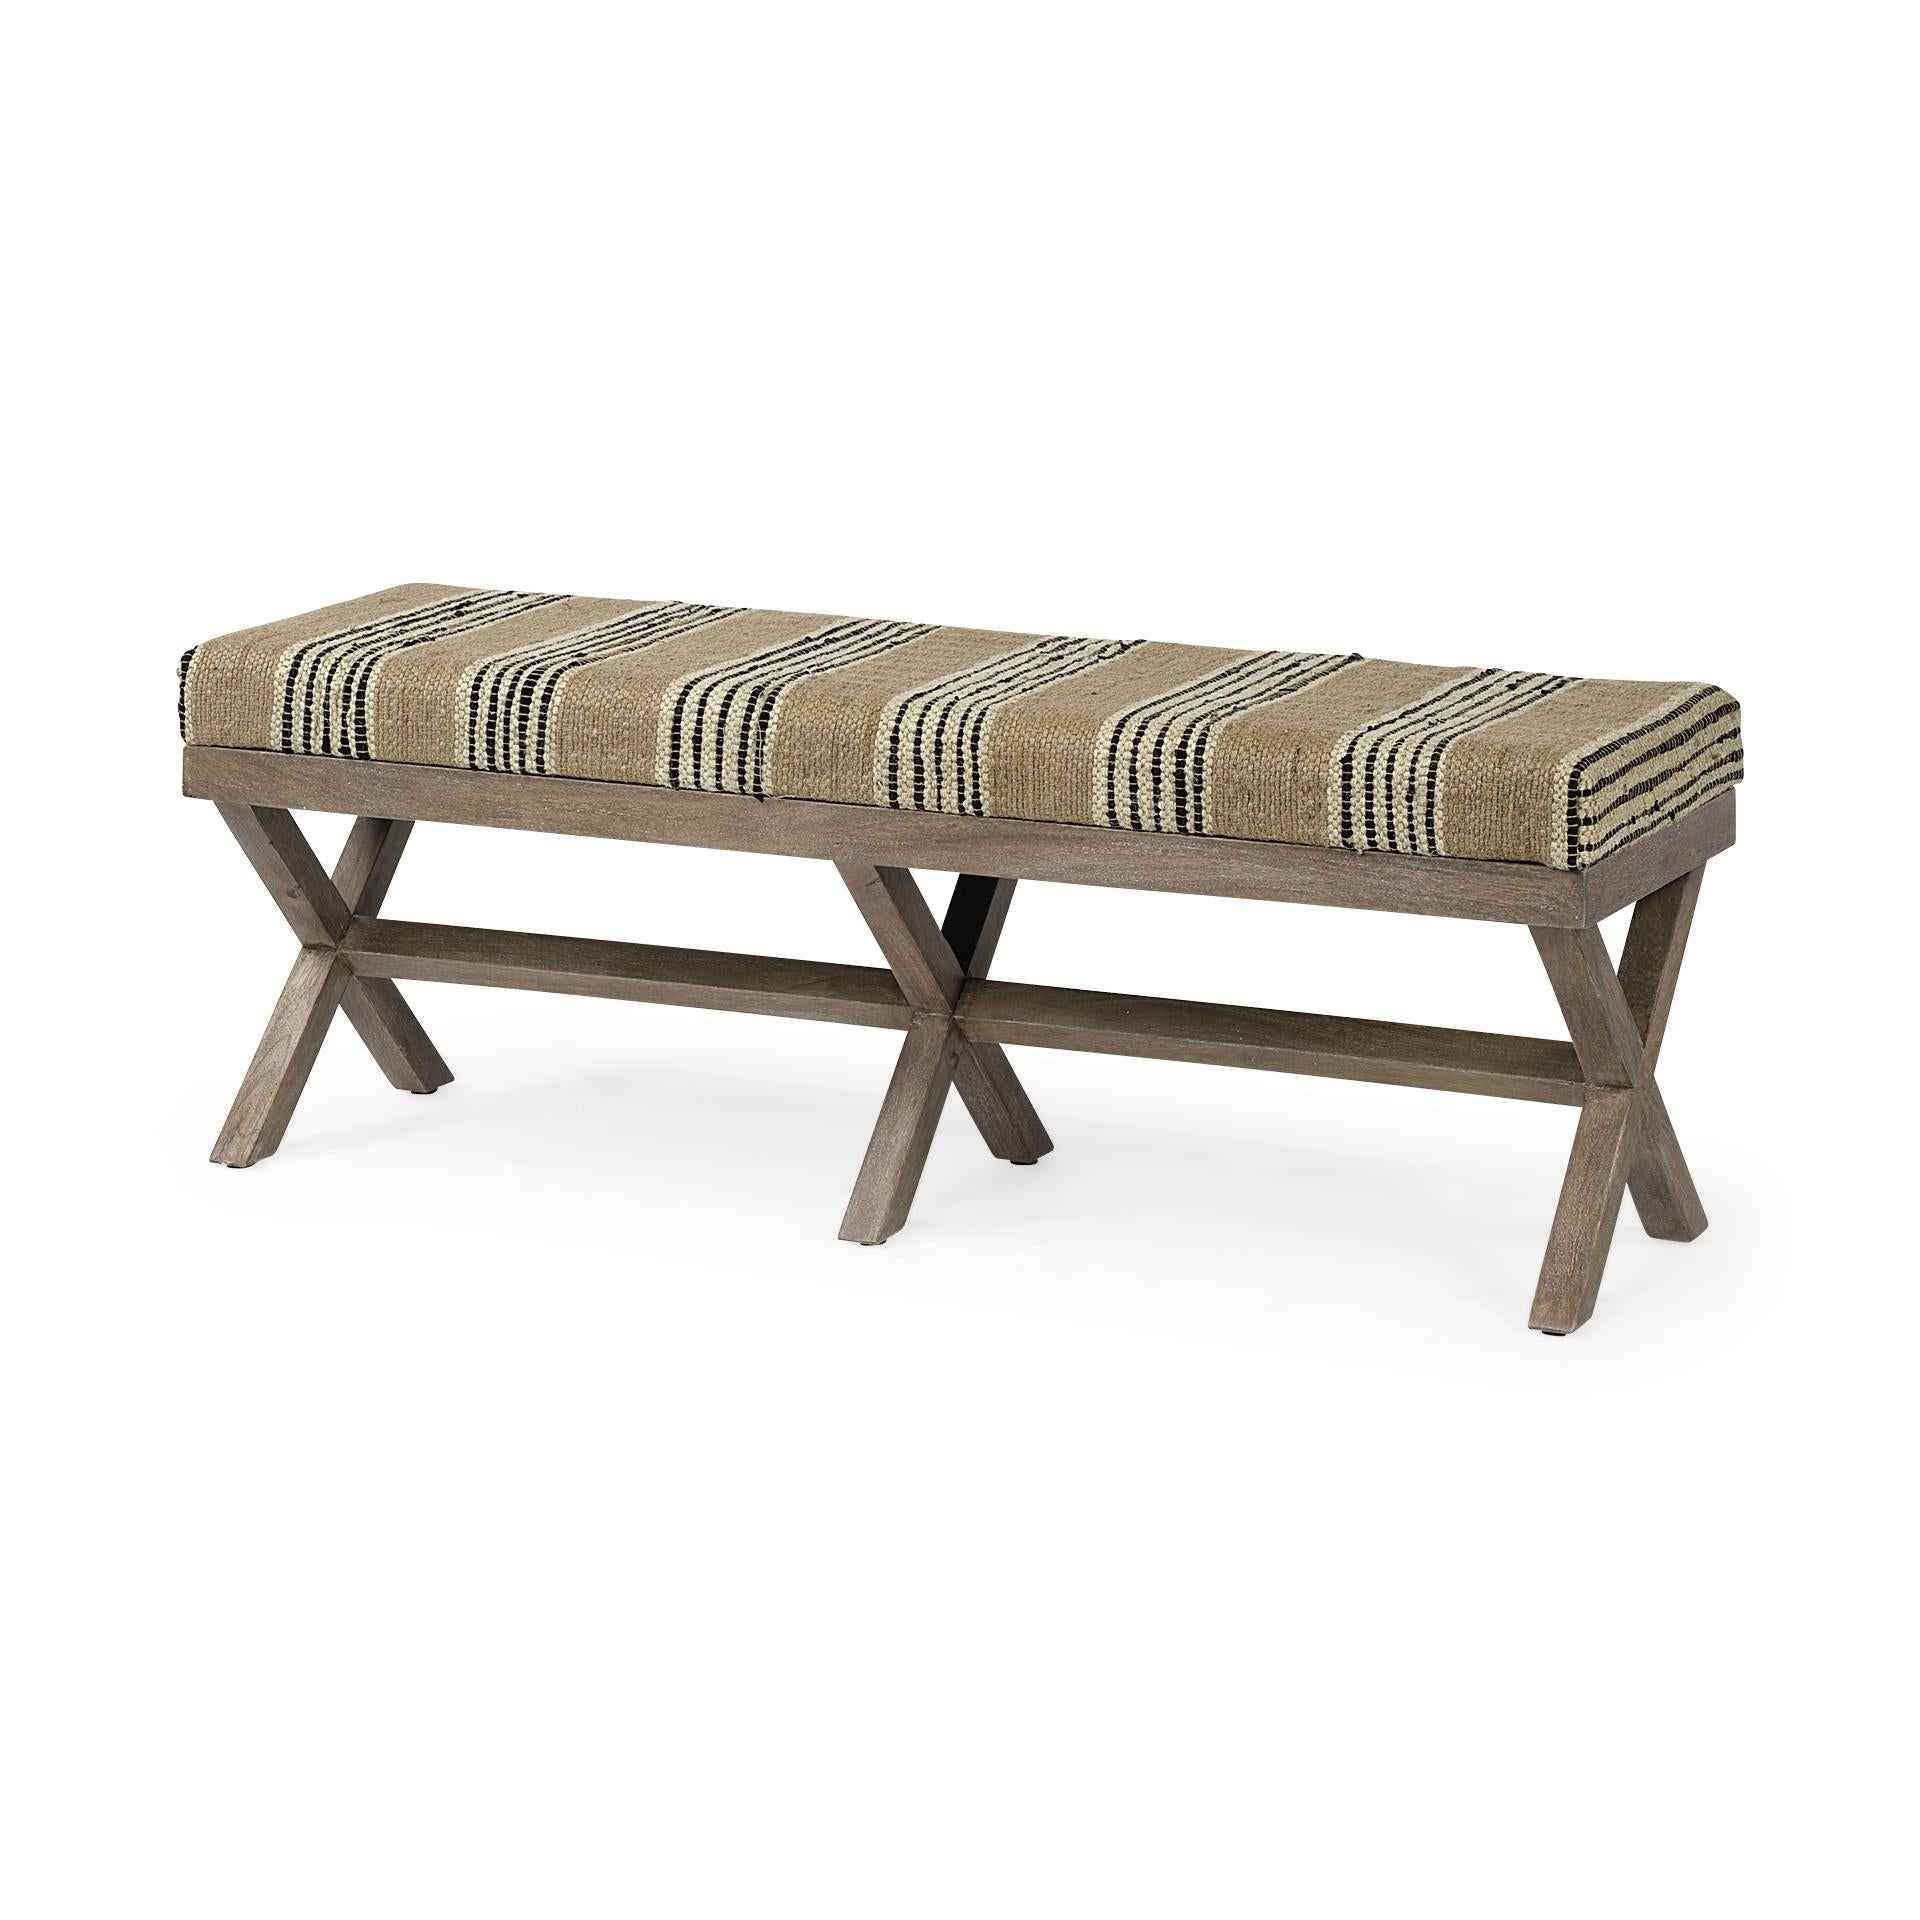 Rectangular Mango Wood Medium Brown Base W Upholstered Beige And Black Stripe Seat Accent Bench